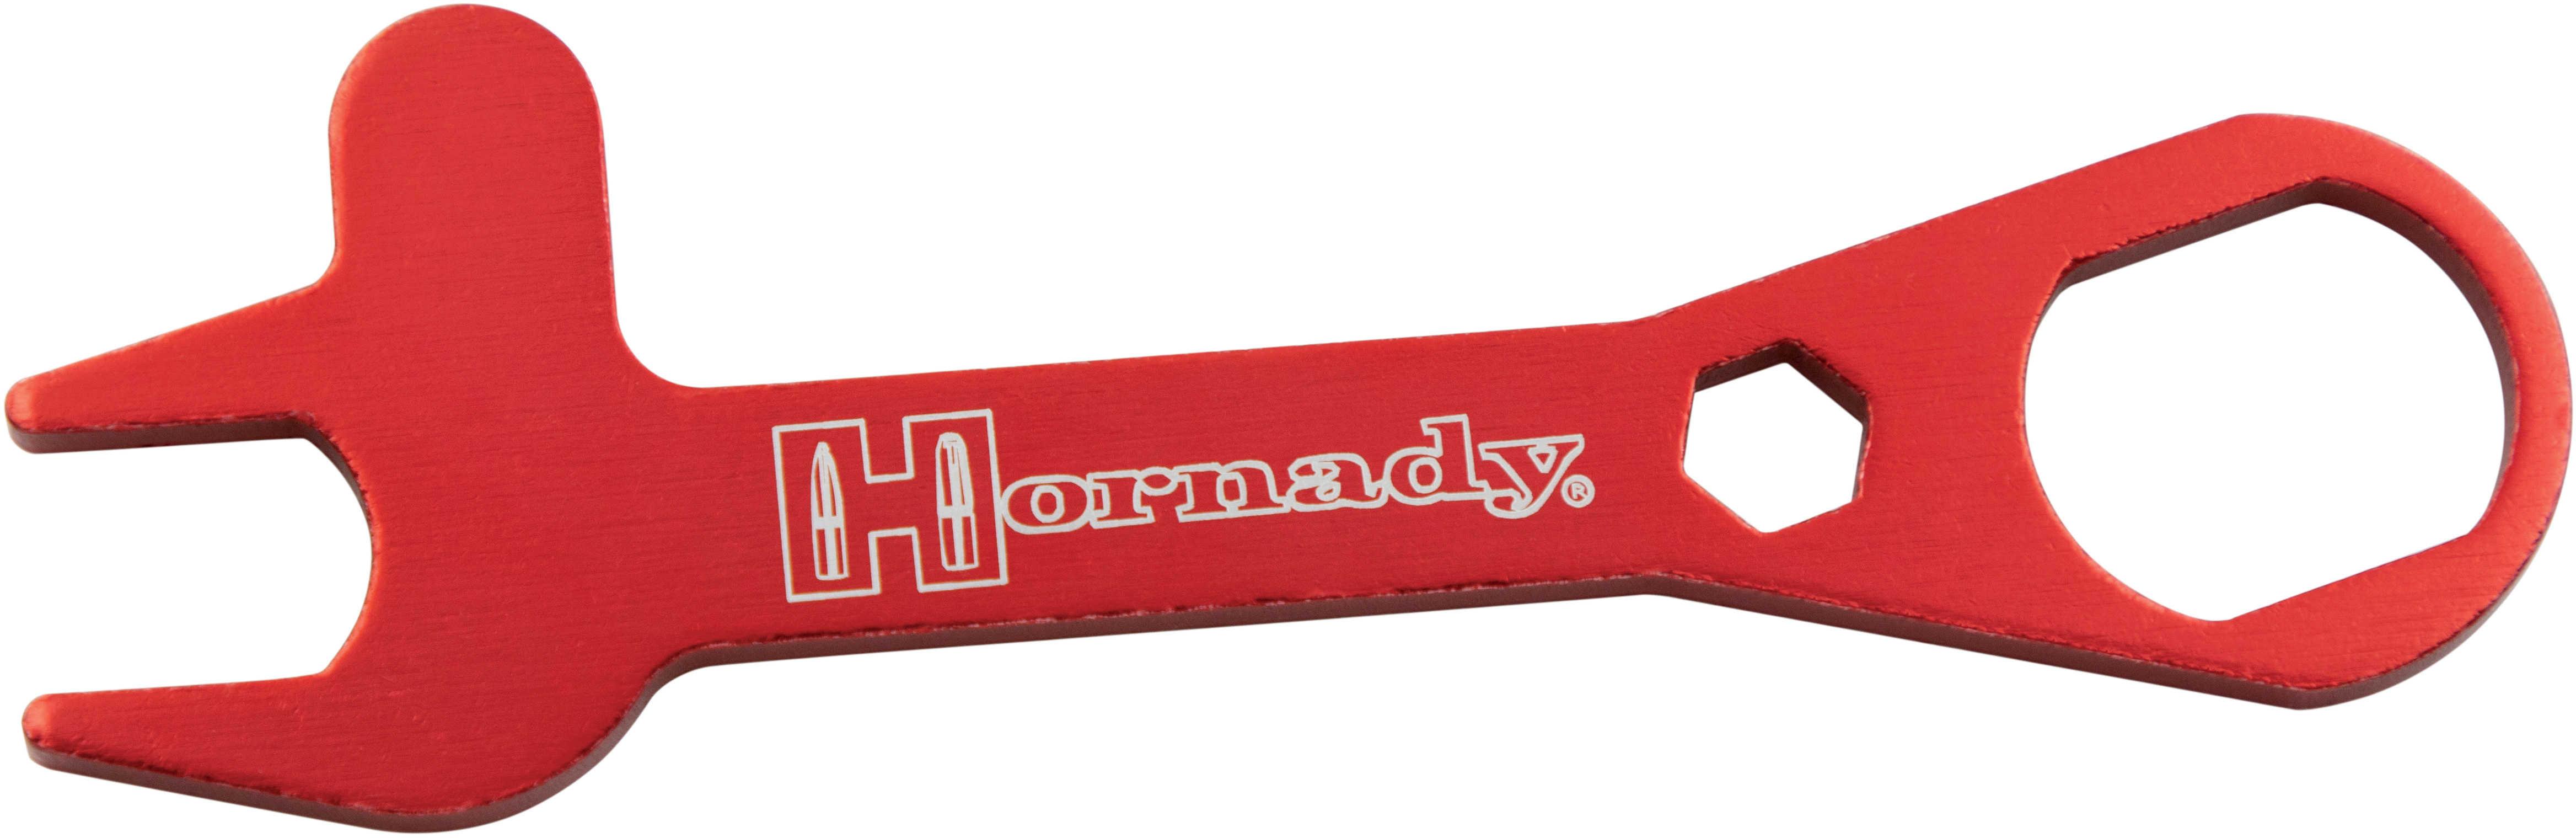 Hornady die wrench 2 of 2.jpg